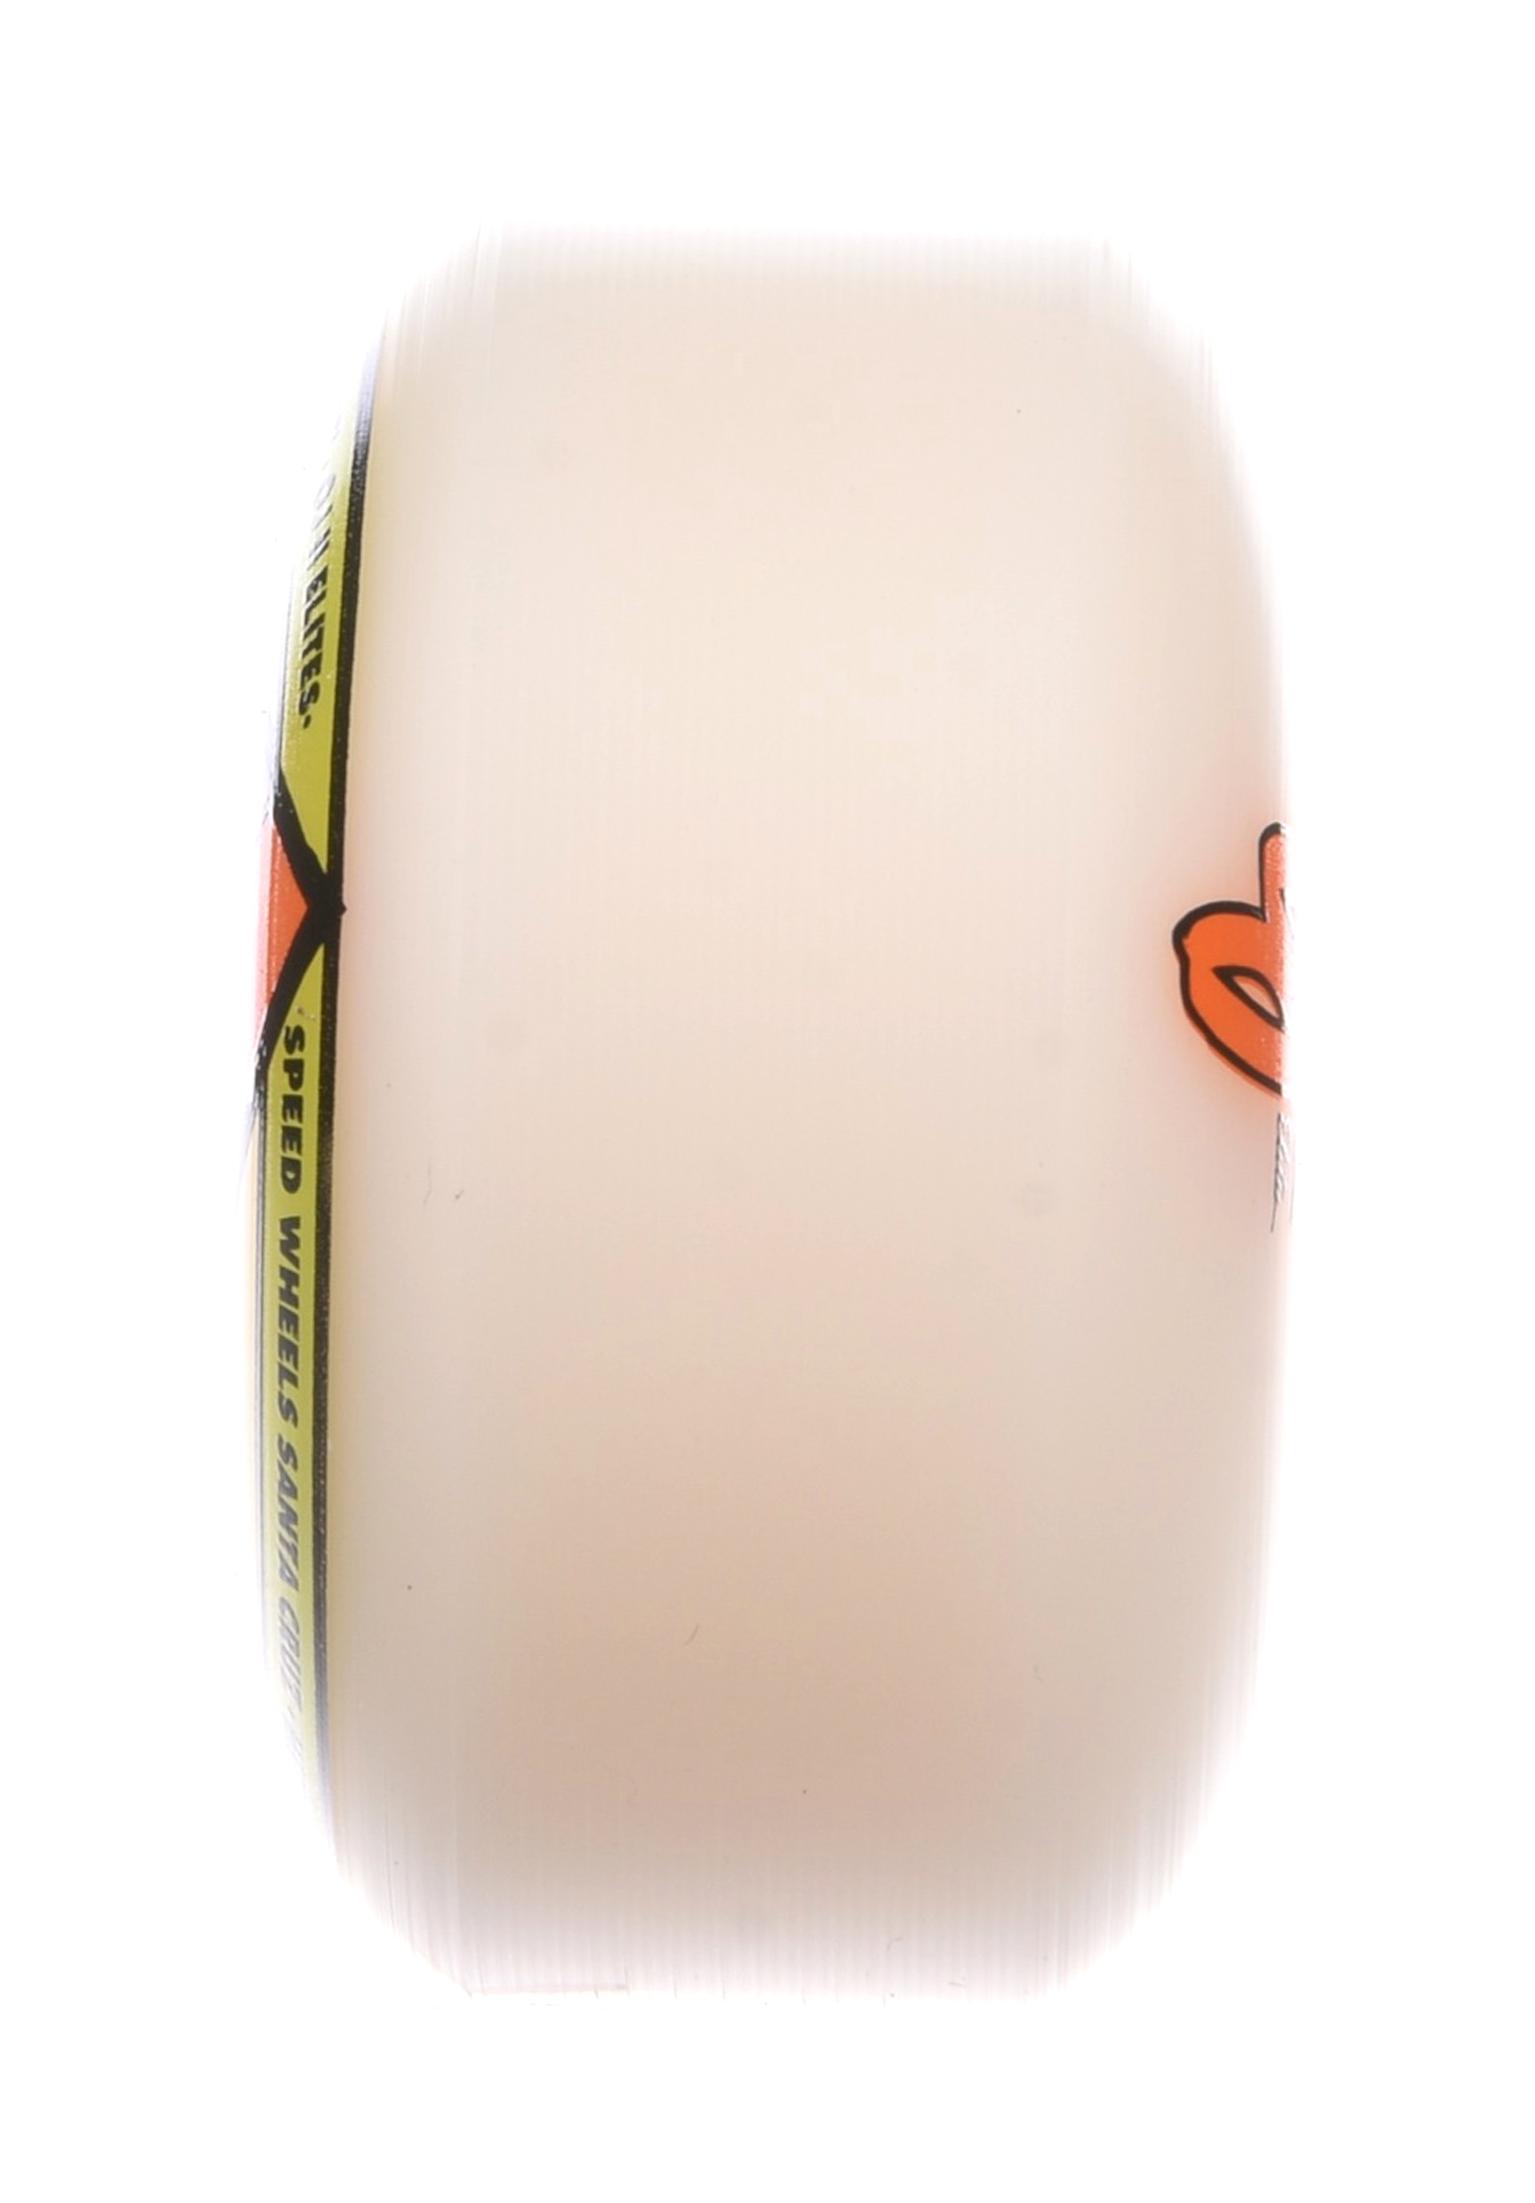 OJ Wheels 52mm Elites EZ Edge 101a skateboardwielen white